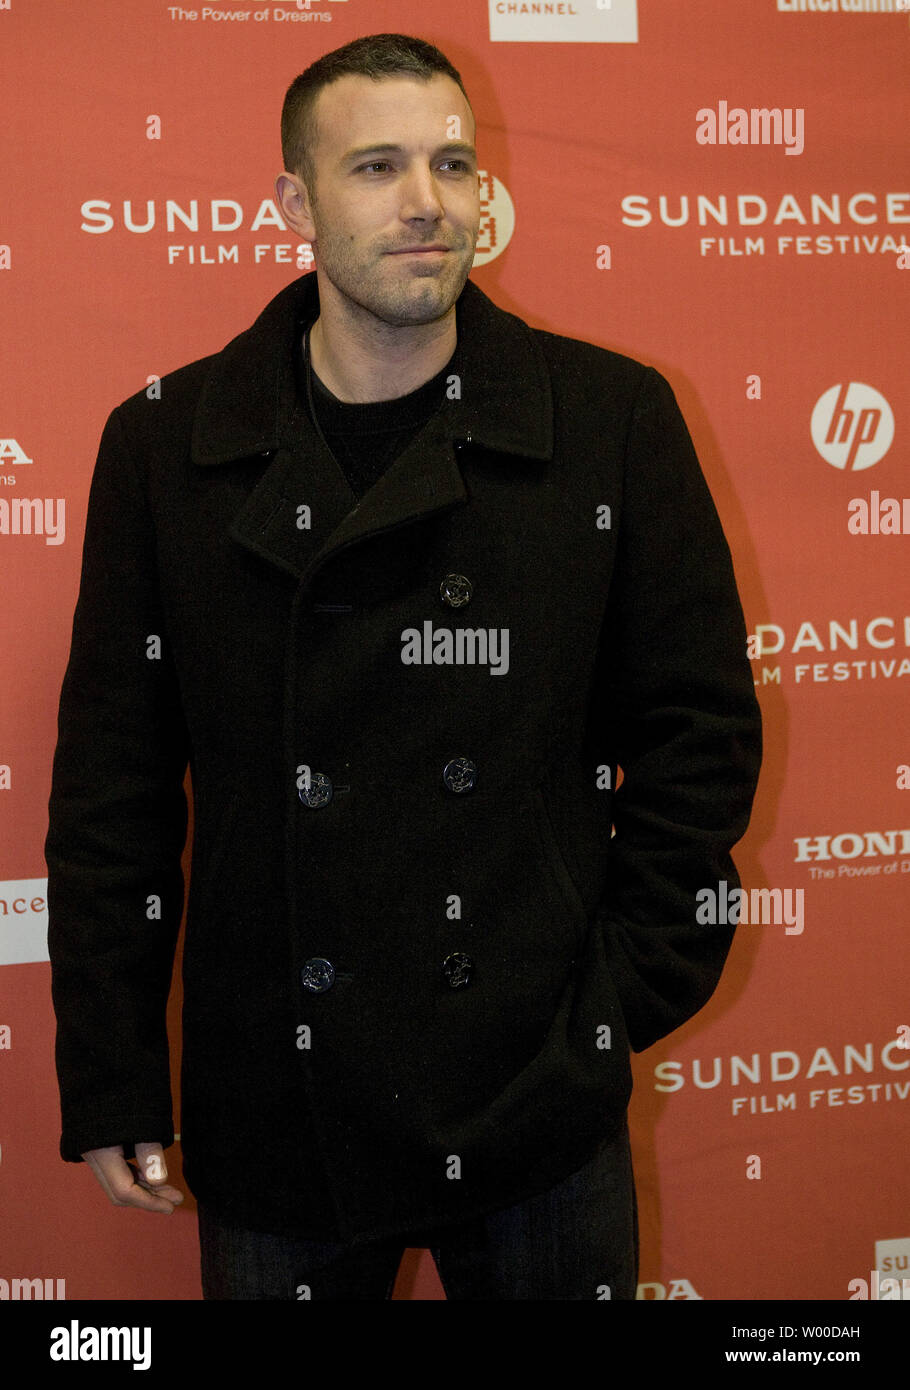 Actor Ben Affleck arrives for the world premiere of  'The Company Menr' at the 2010 Sundance Film Festival on January 22, 2010 in Park City, Utah.         UPI/Gary C. Caskey.. Stock Photo